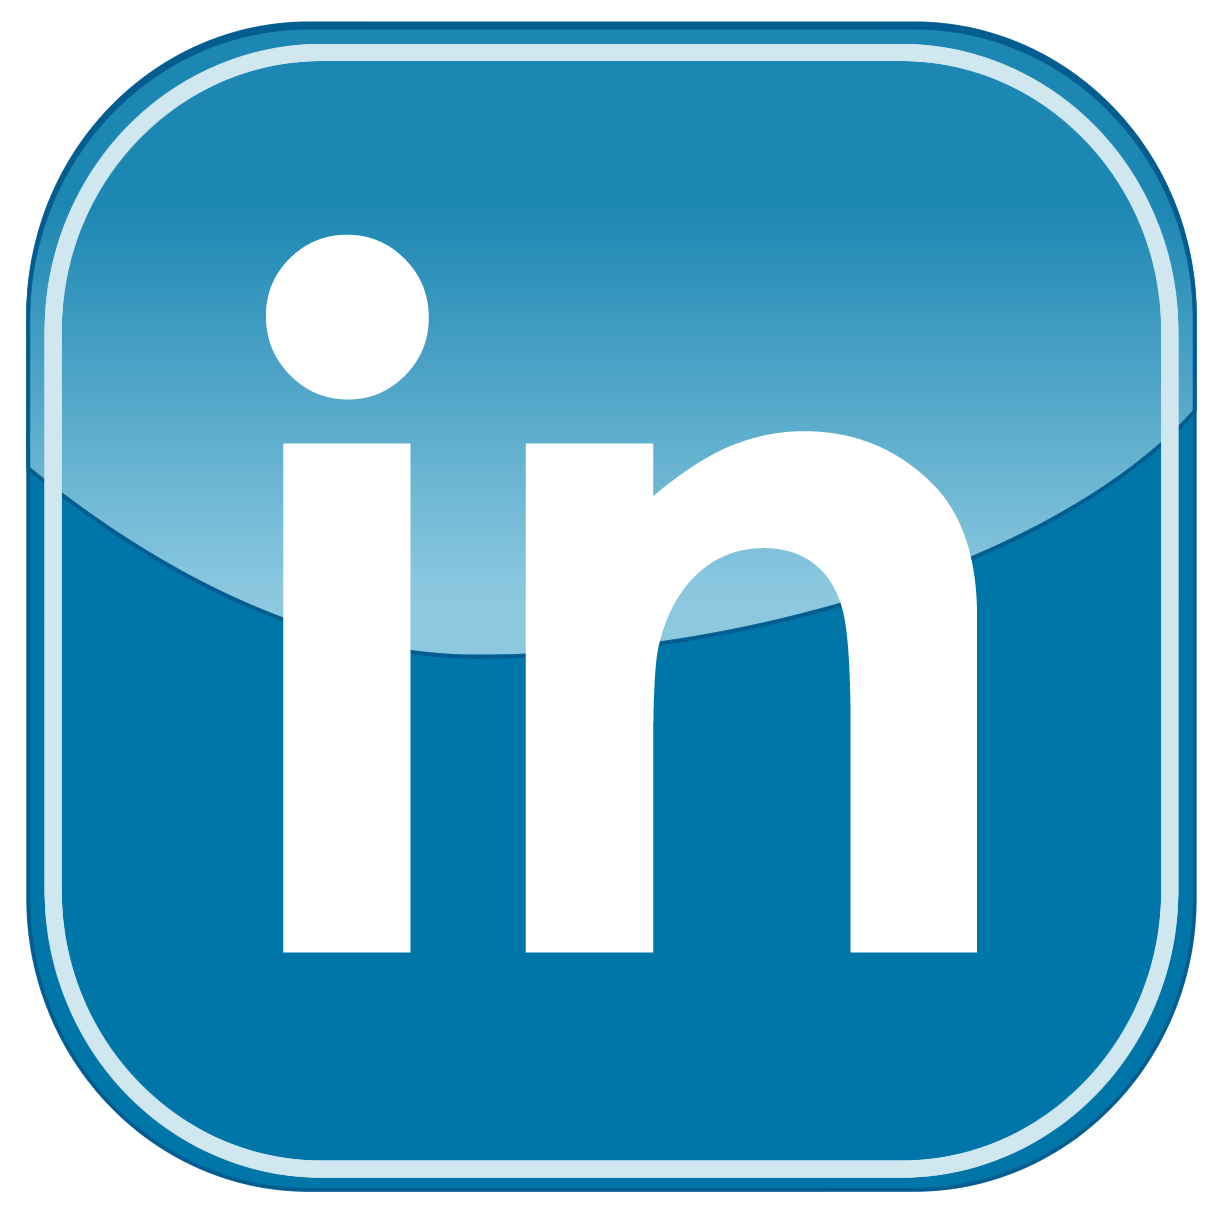 Follow me in LinkedIn